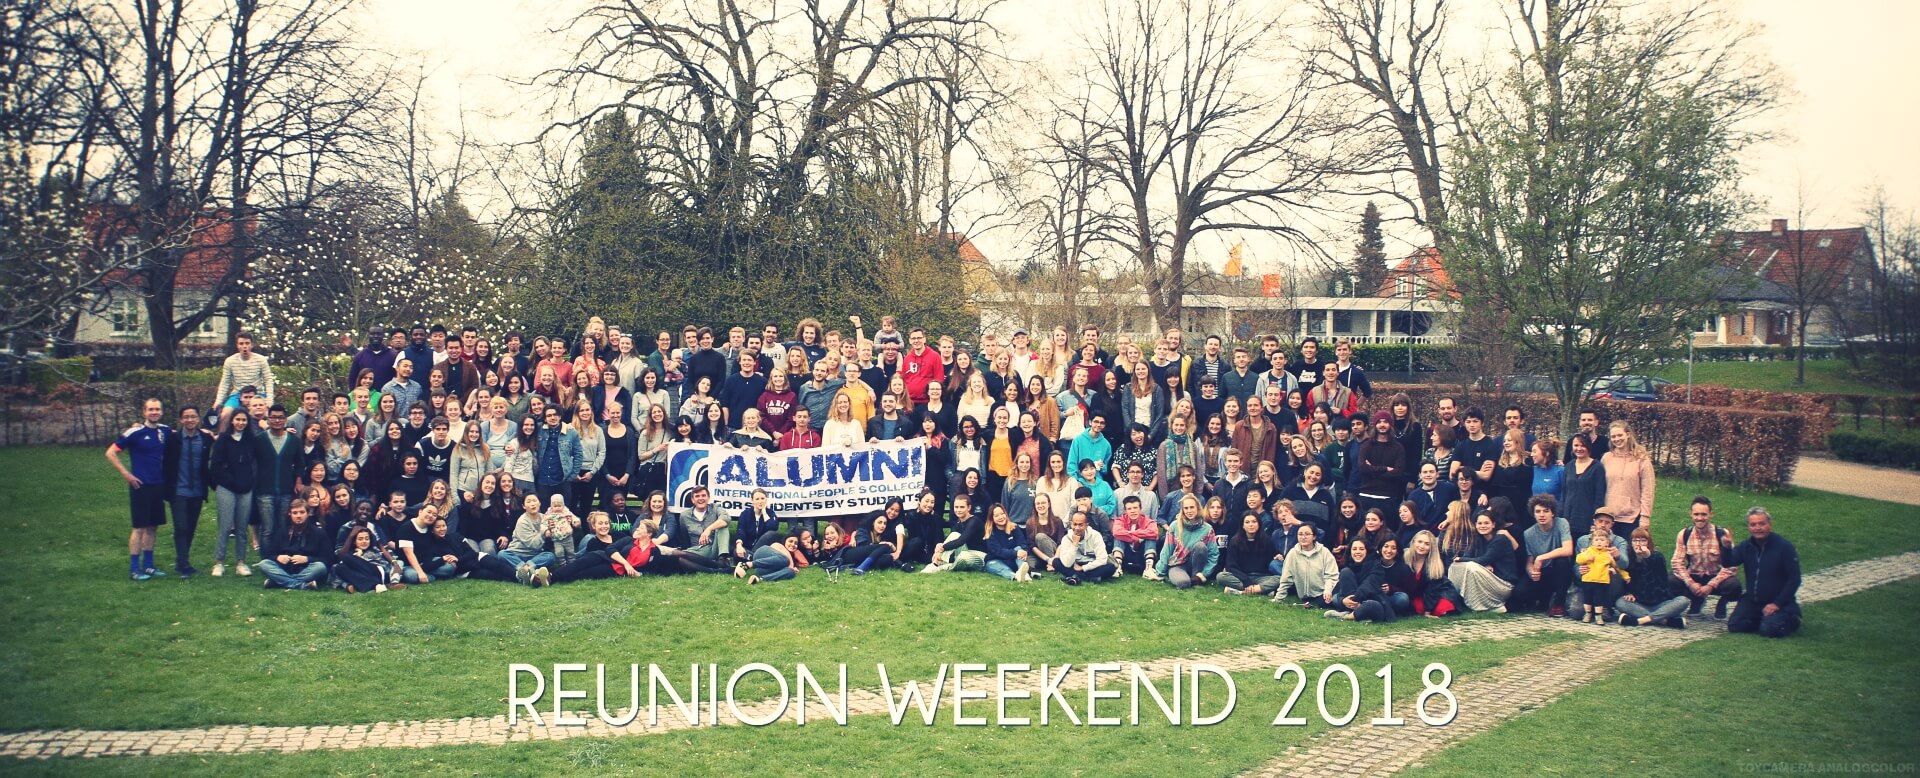 folk high school reunion weekend 2018 all at International People's college in Denmark